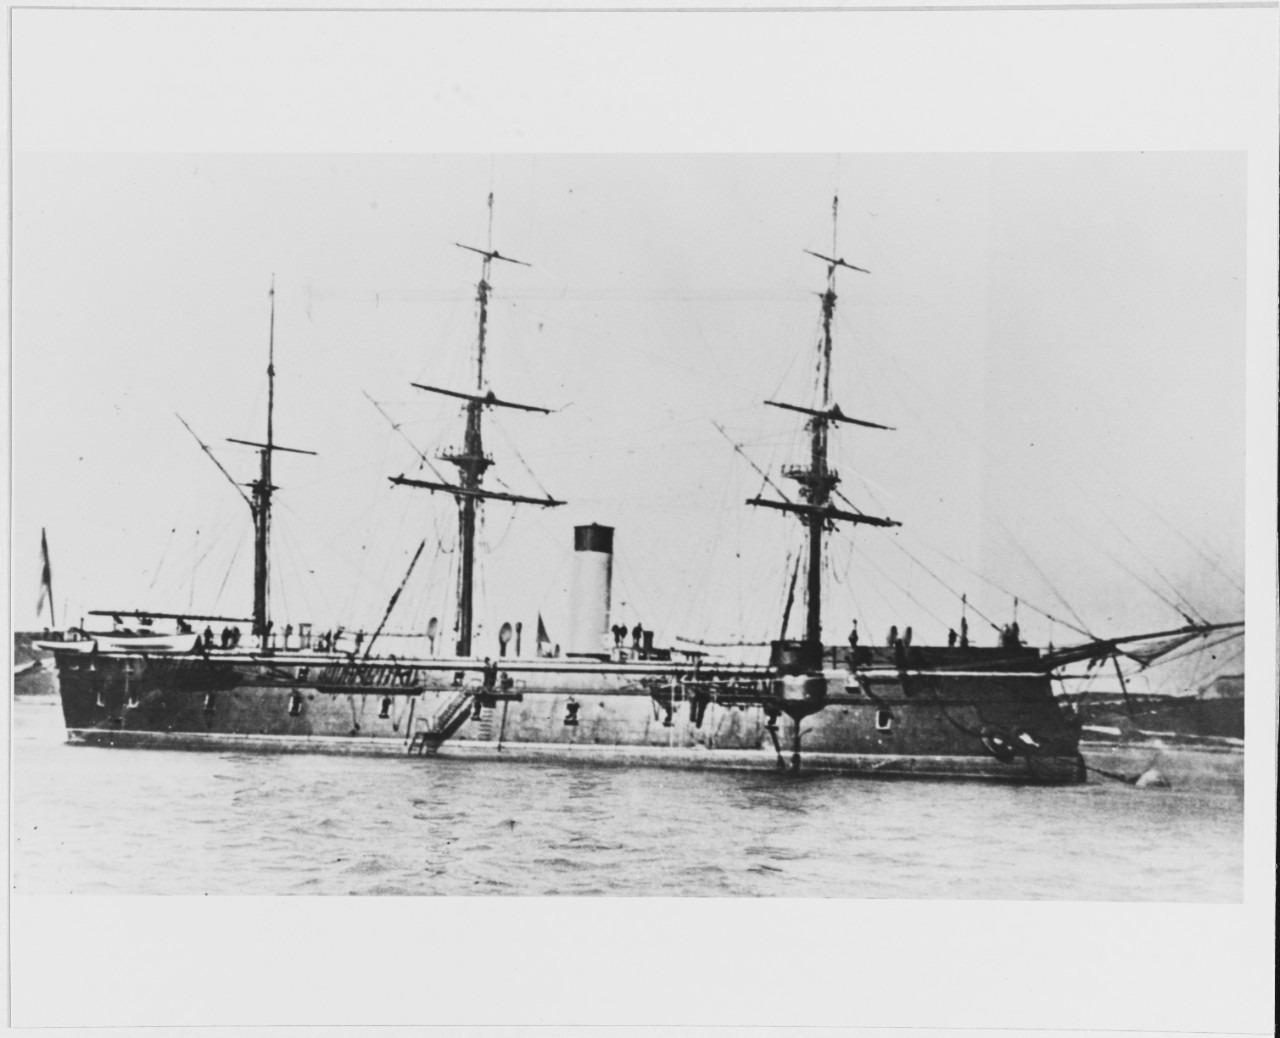 HABSBURG (Austrian battleship, 1865-1898)